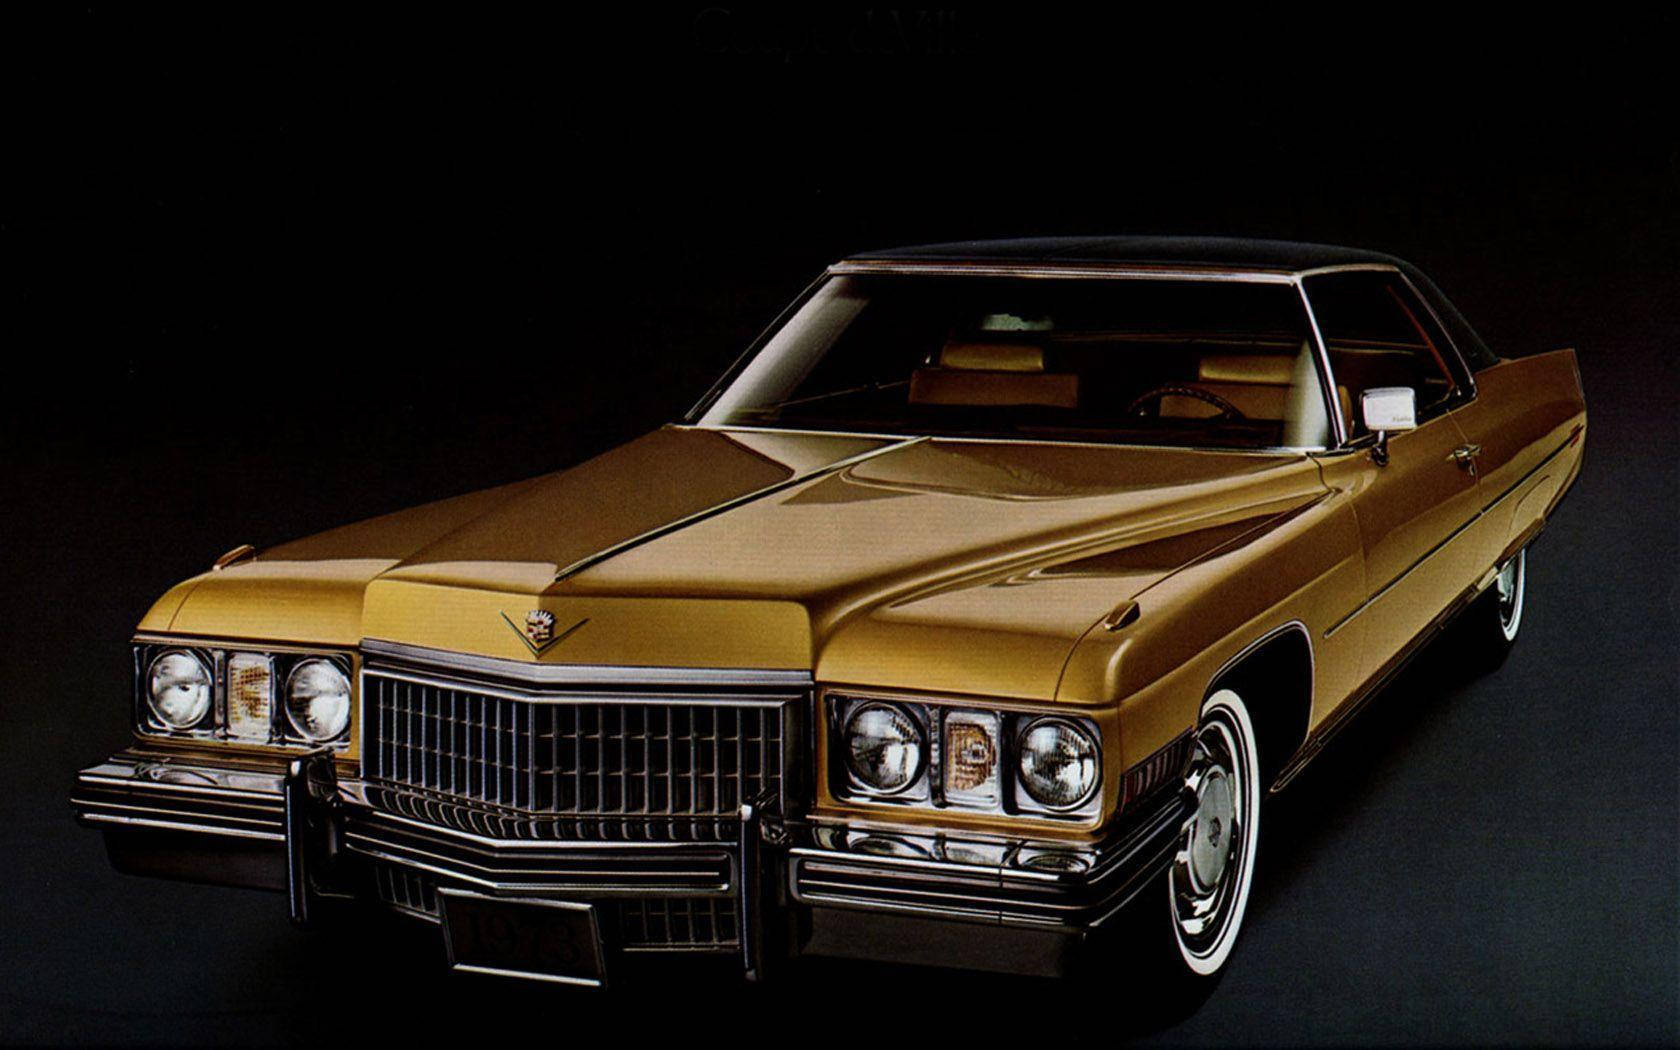 Classic Brown Cadillac Car Wallpaper